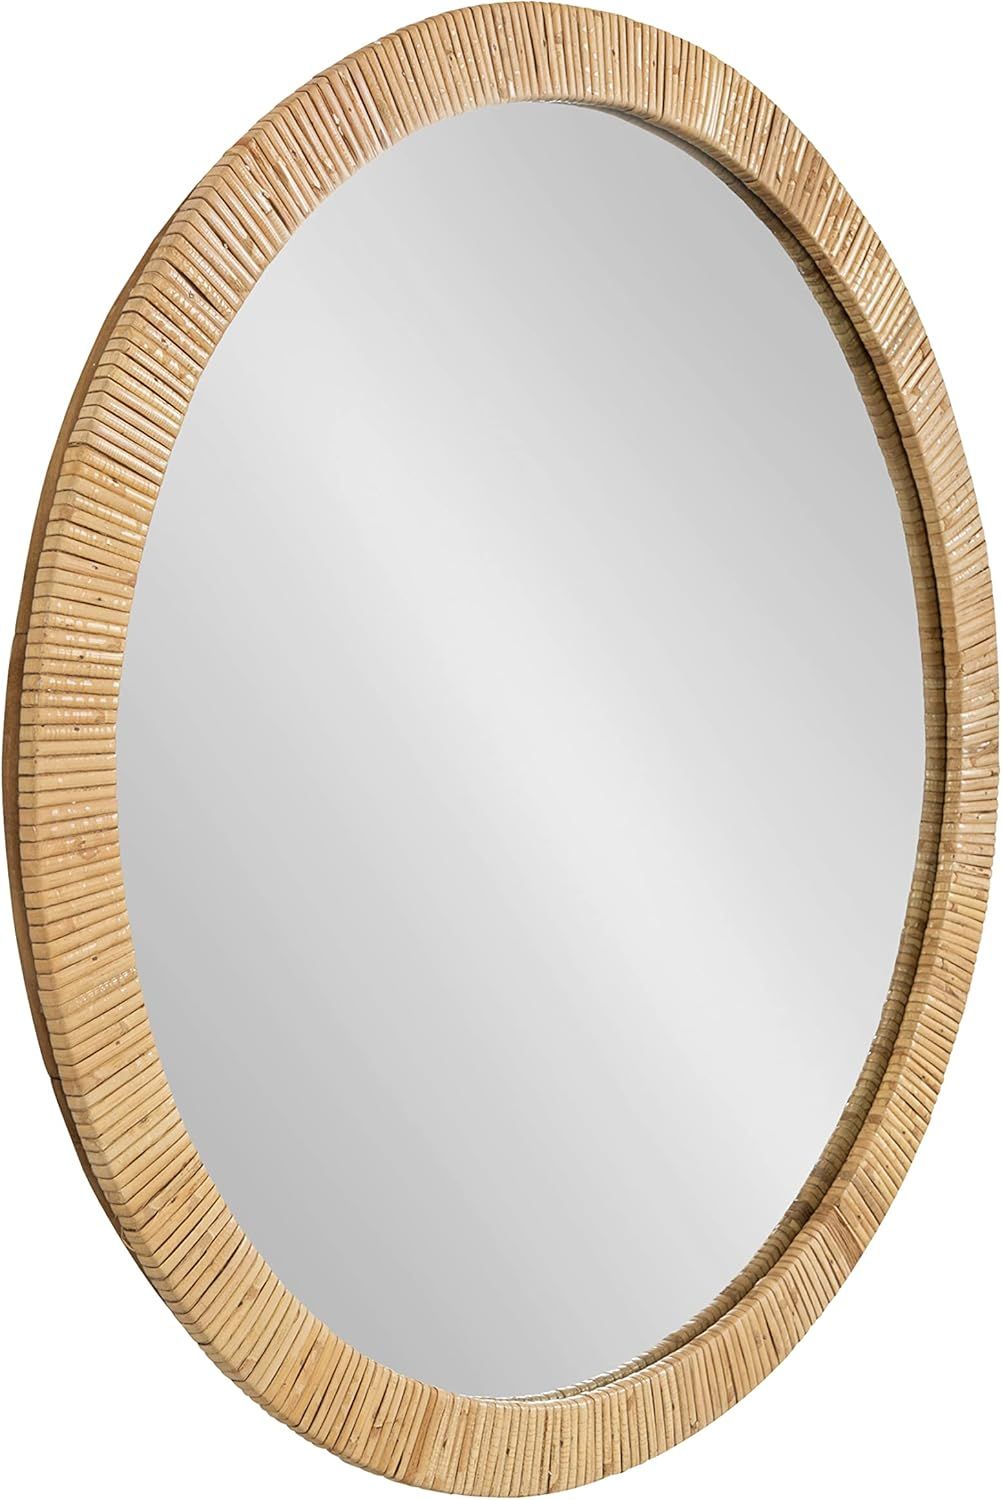 Kate and Laurel Rahfy Boho Round Rattan Mirror, 28 Inch Diameter, Natural Wood, Decorative Round ... | Amazon (US)